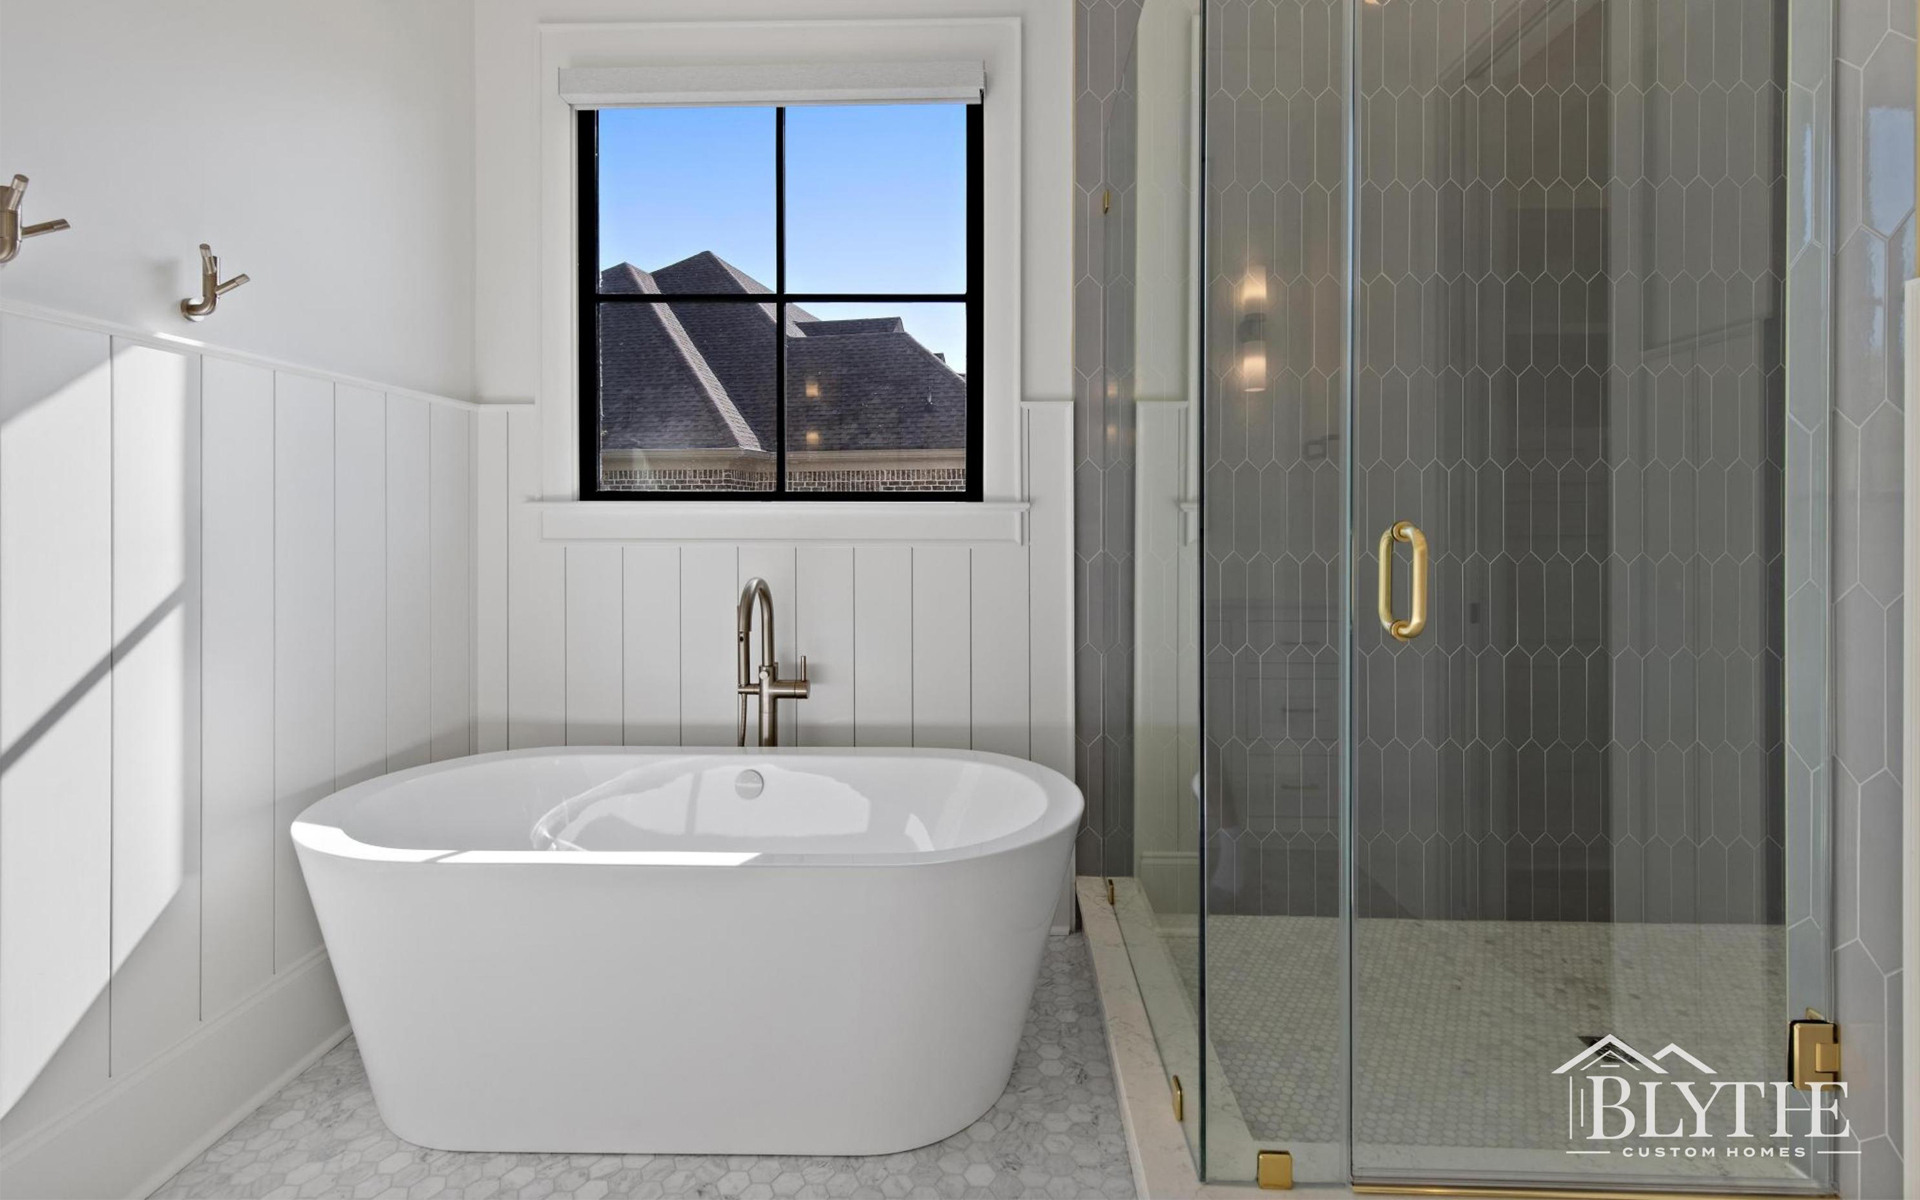 Blythe Custom Homes' Picket Tile Shower & Soaking Tub